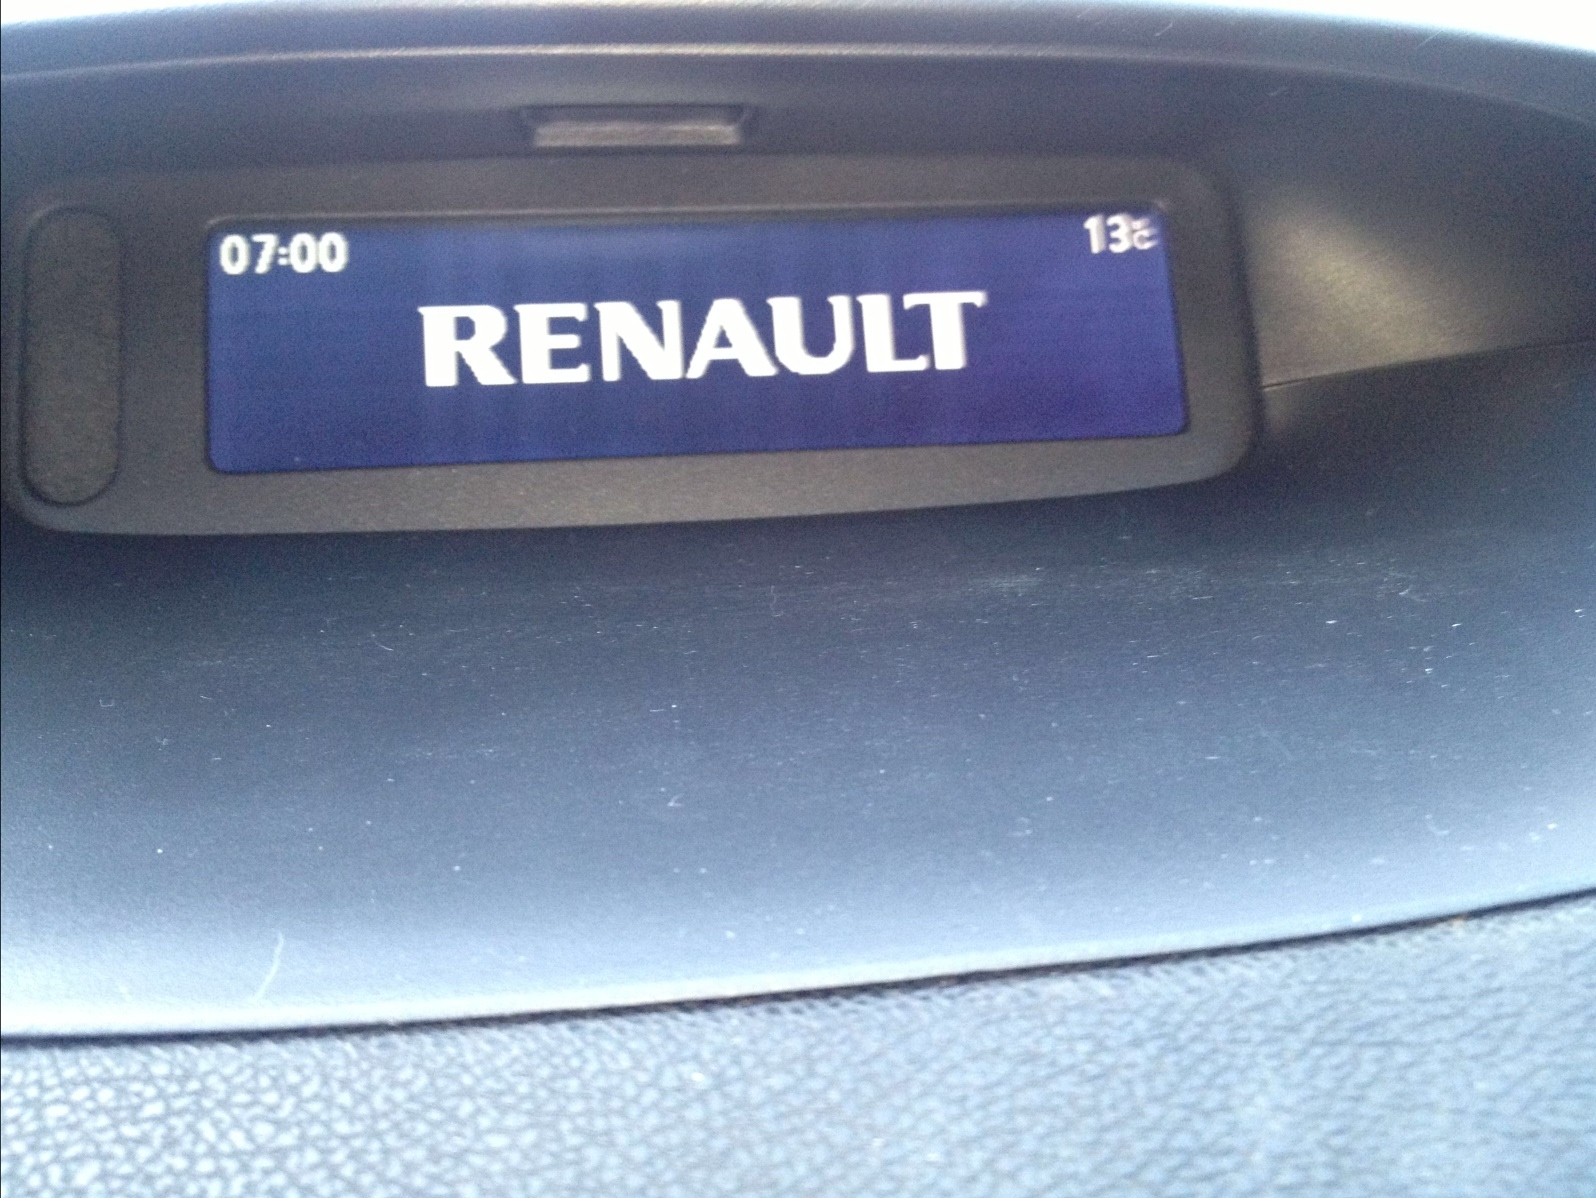 [Megane III phI] jak ustawić zegarek FORUM Renault